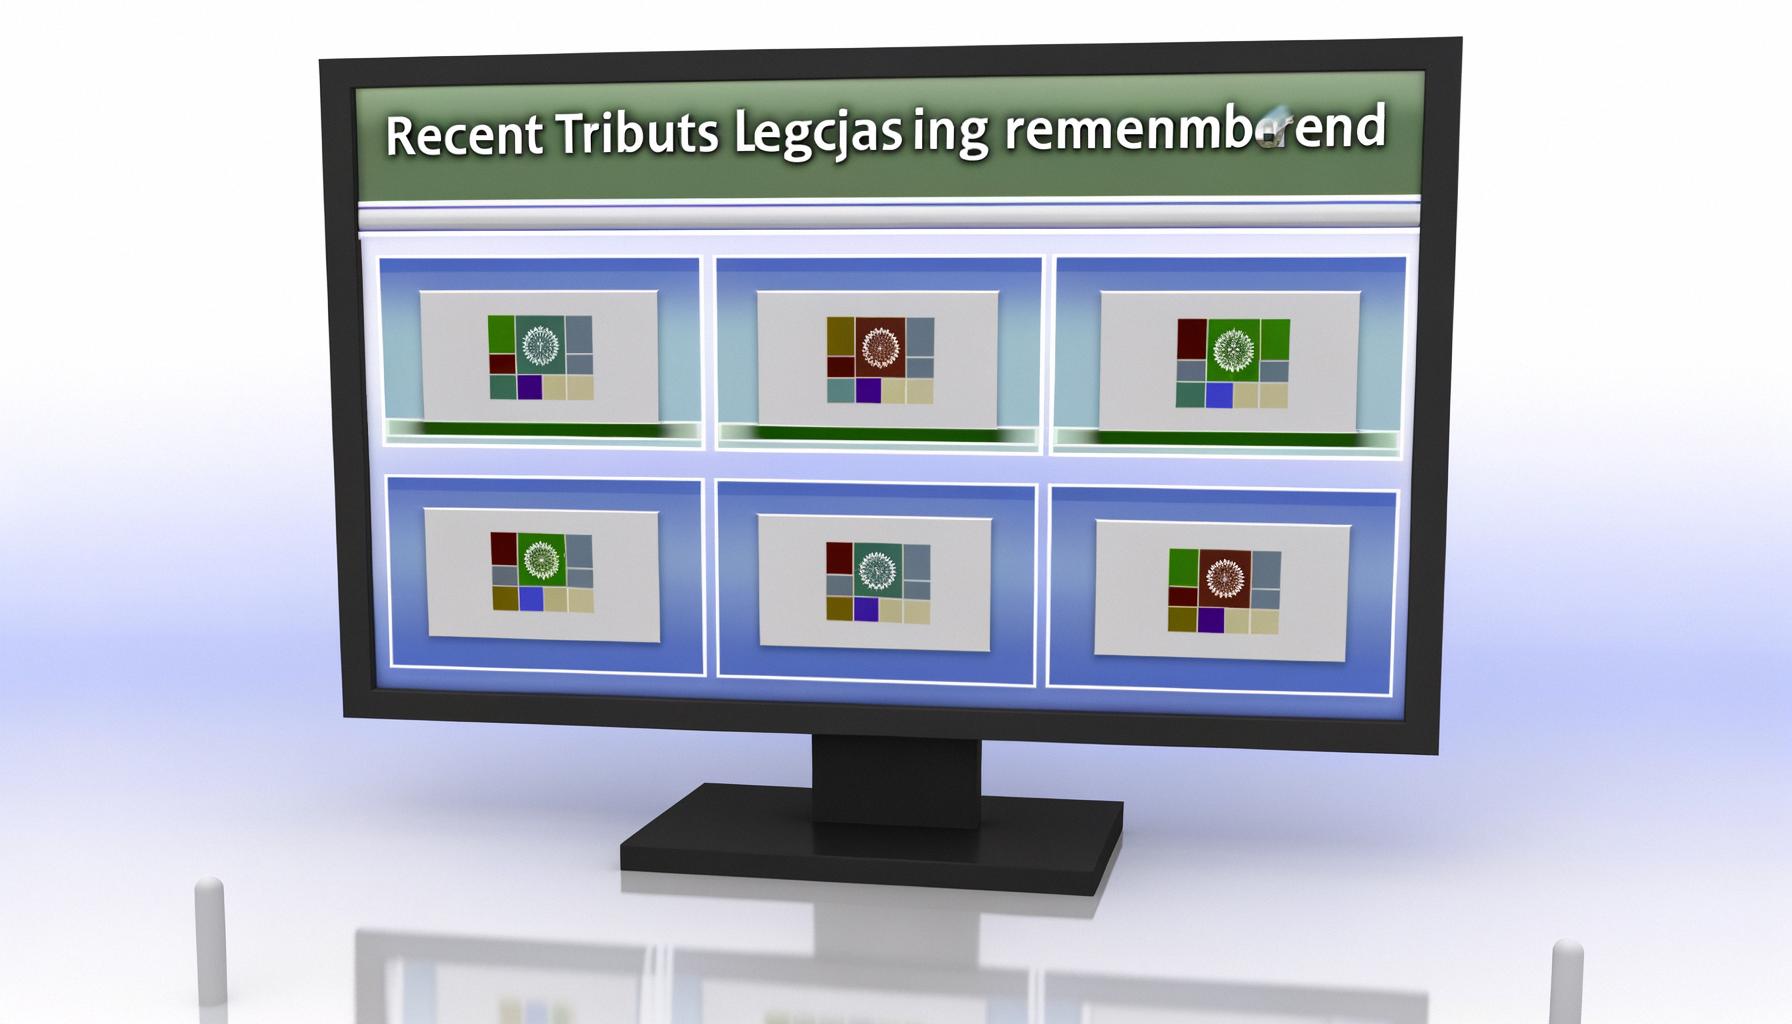 Recent tributes highlight legacies